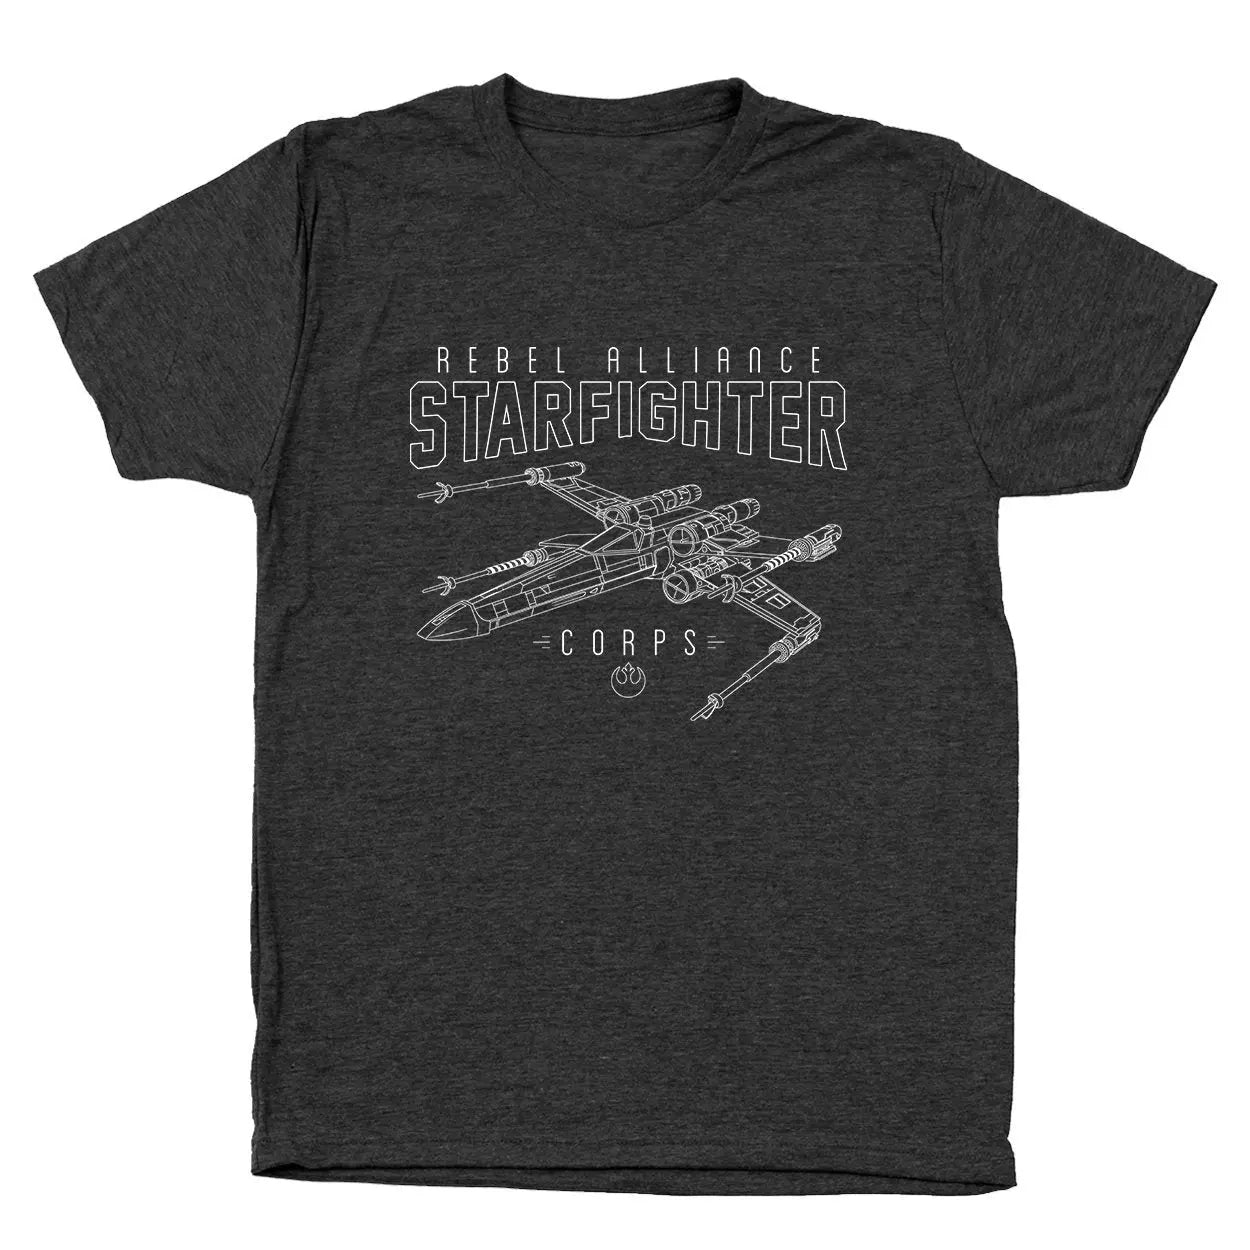 Rebel Alliance Starfighter Corps Tshirt - Donkey Tees